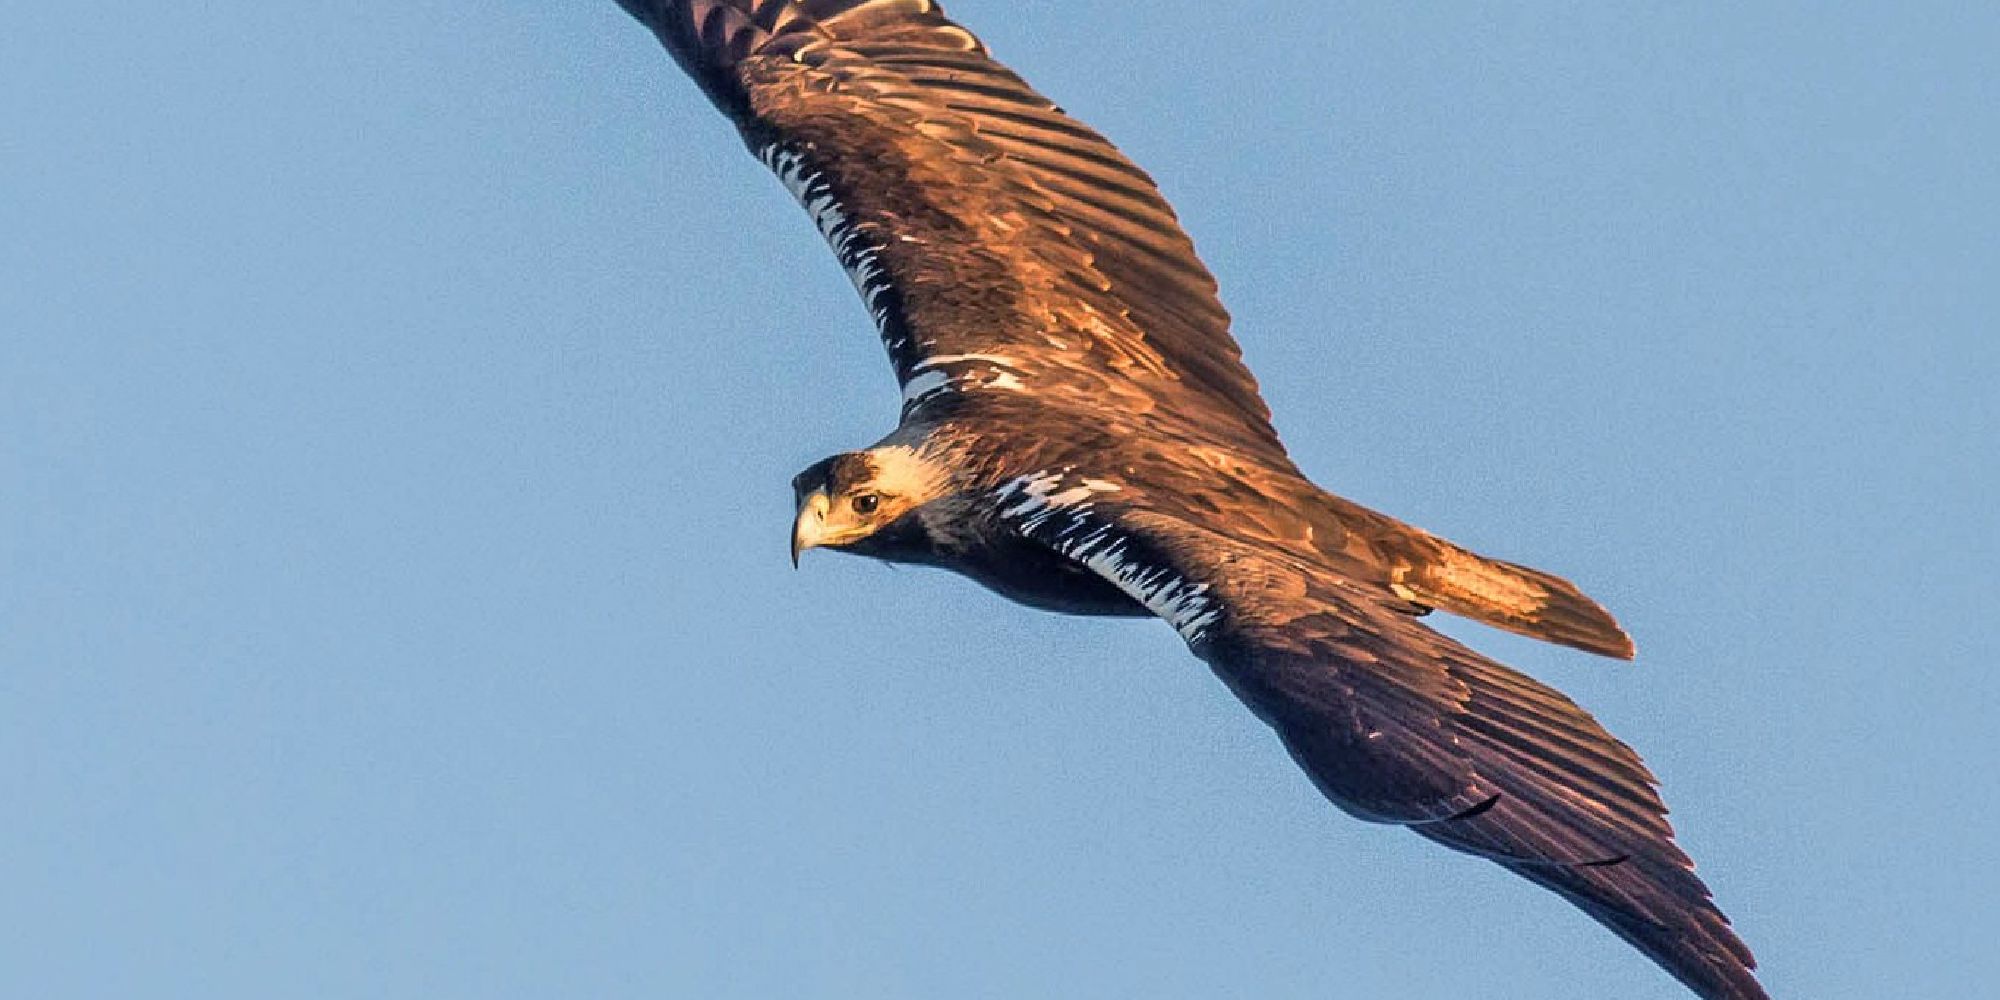 A Spanish imperial eagle soaring through the air